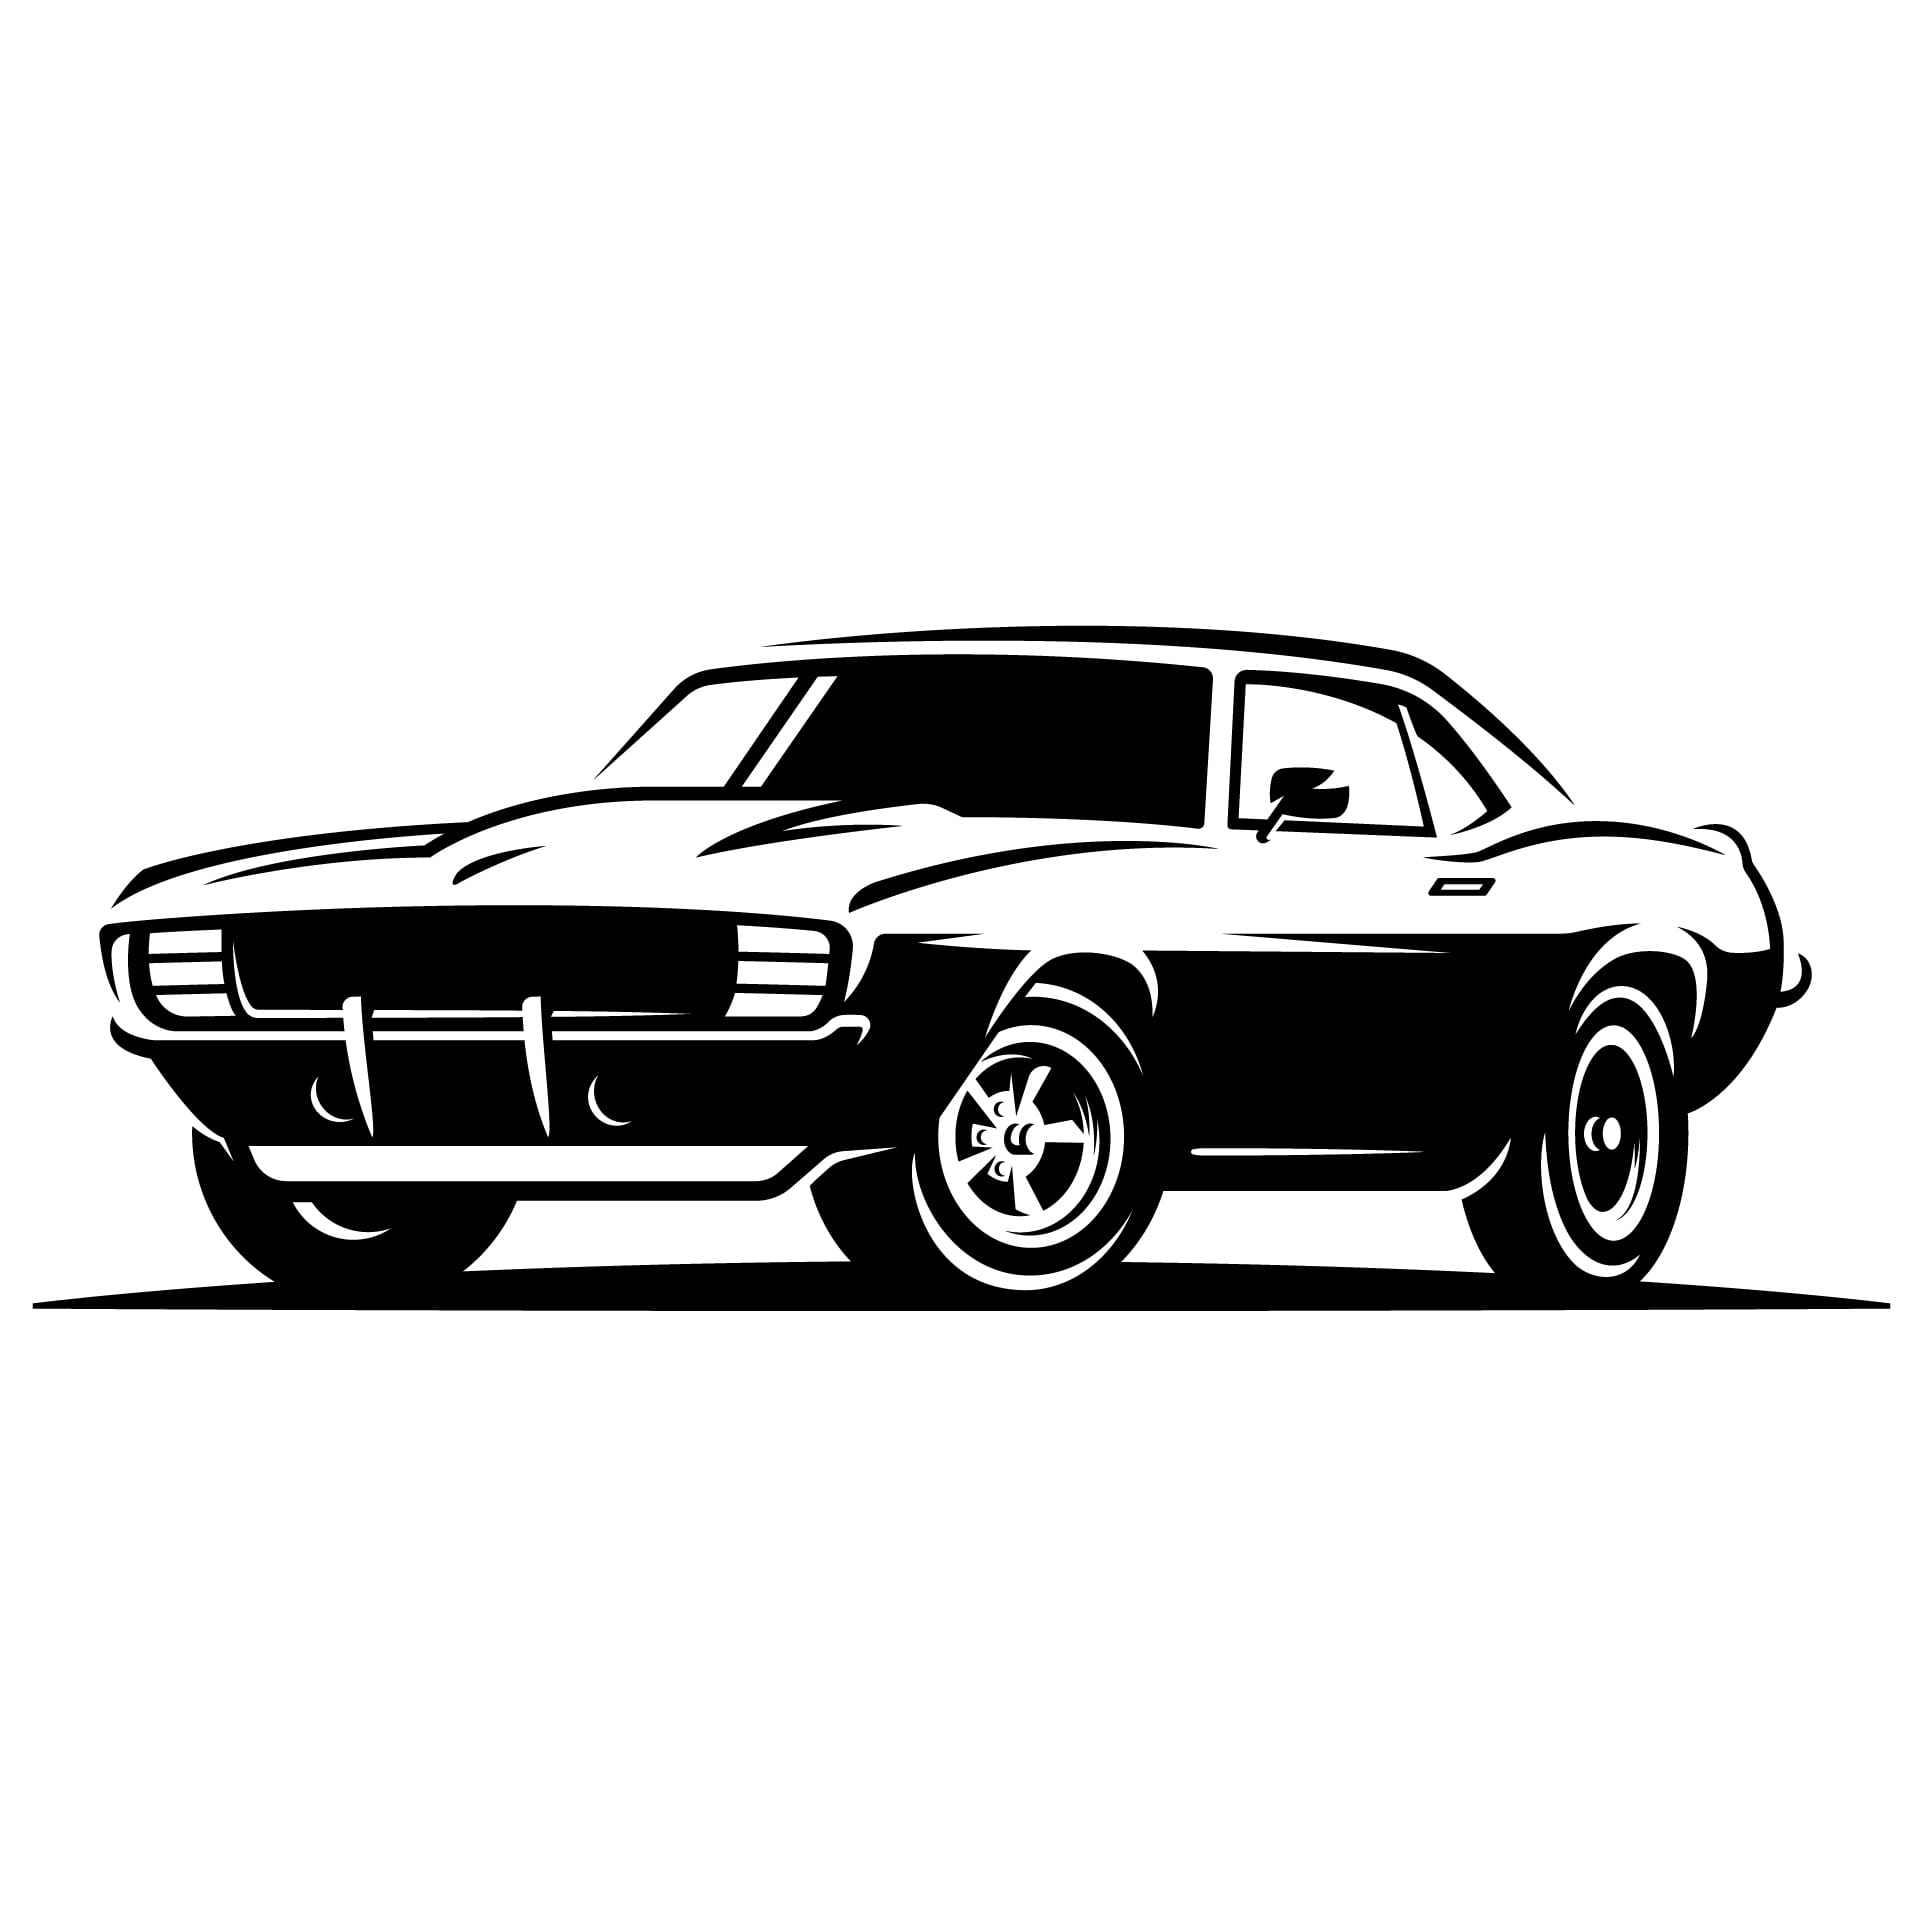 Car profile picture muscle car illustrations excellent image